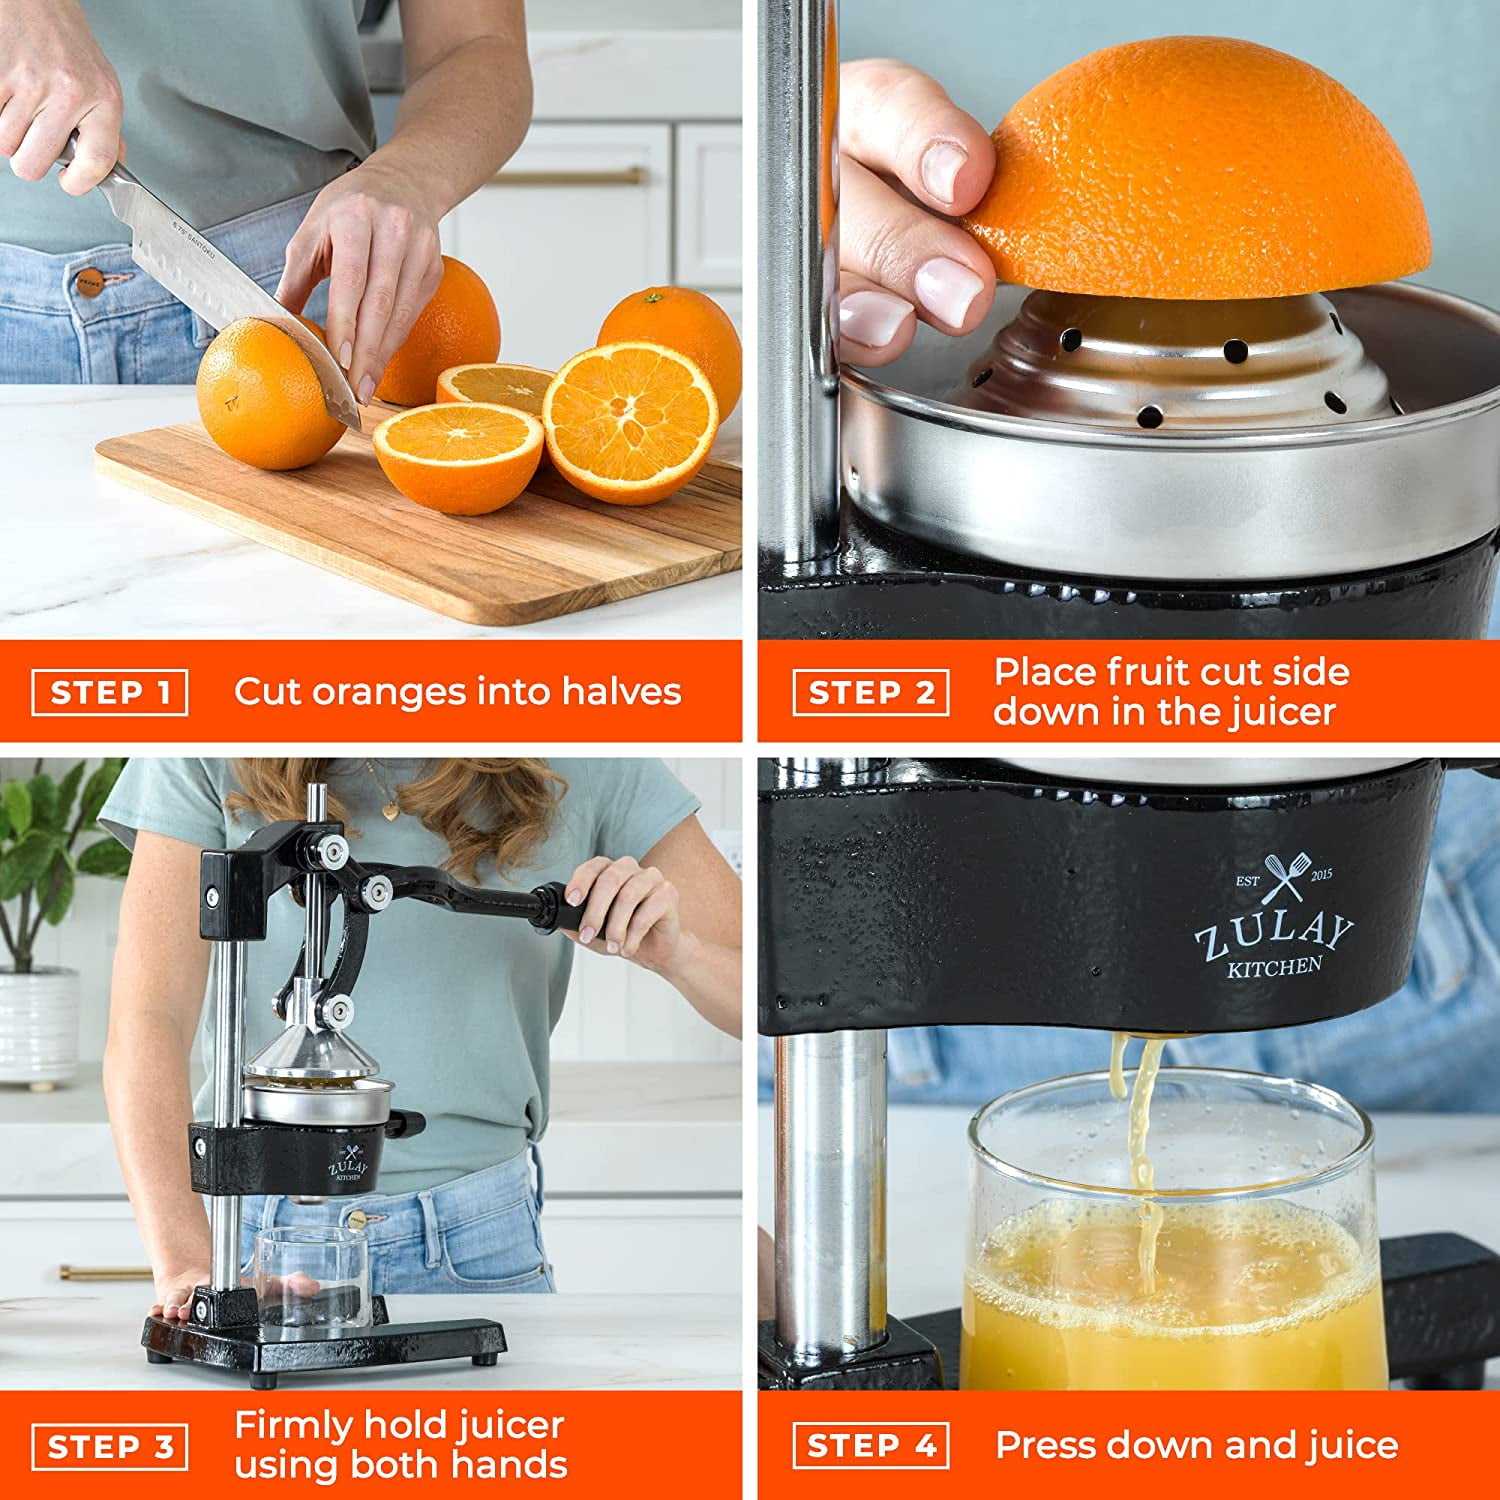 Zulay Professional Citrus Juicer - Manual Citrus Press and Orange Squeezer + 2 in 1 Metal Lemon Squeezer Complete Set